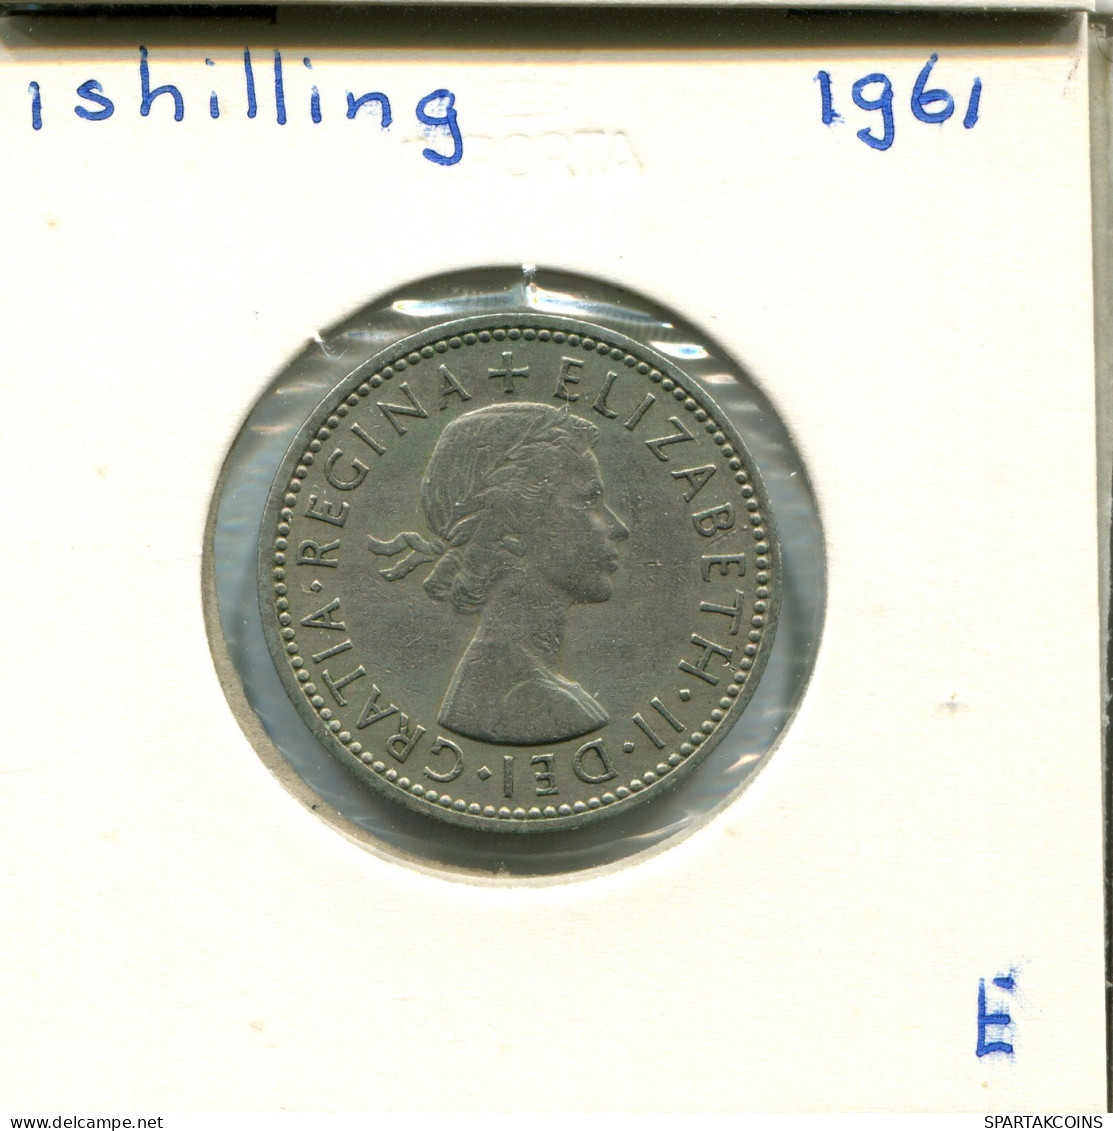 SHILLING 1961 UK GROßBRITANNIEN GREAT BRITAIN Münze #AX017.D.A - I. 1 Shilling